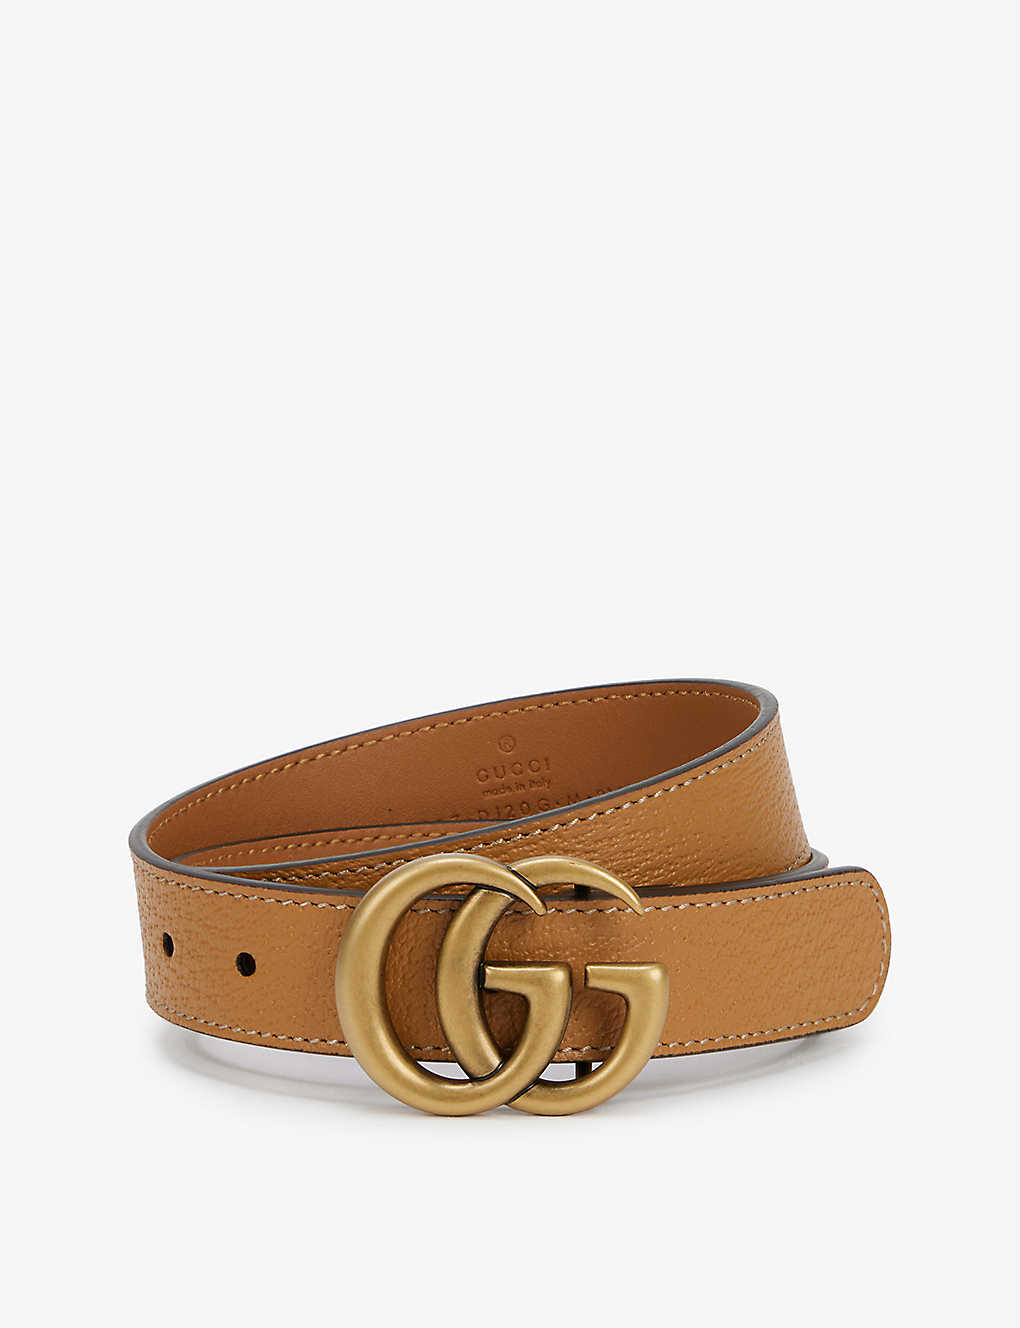 GG leather belt 2-8 years Selfridges & Co Girls Accessories Belts 